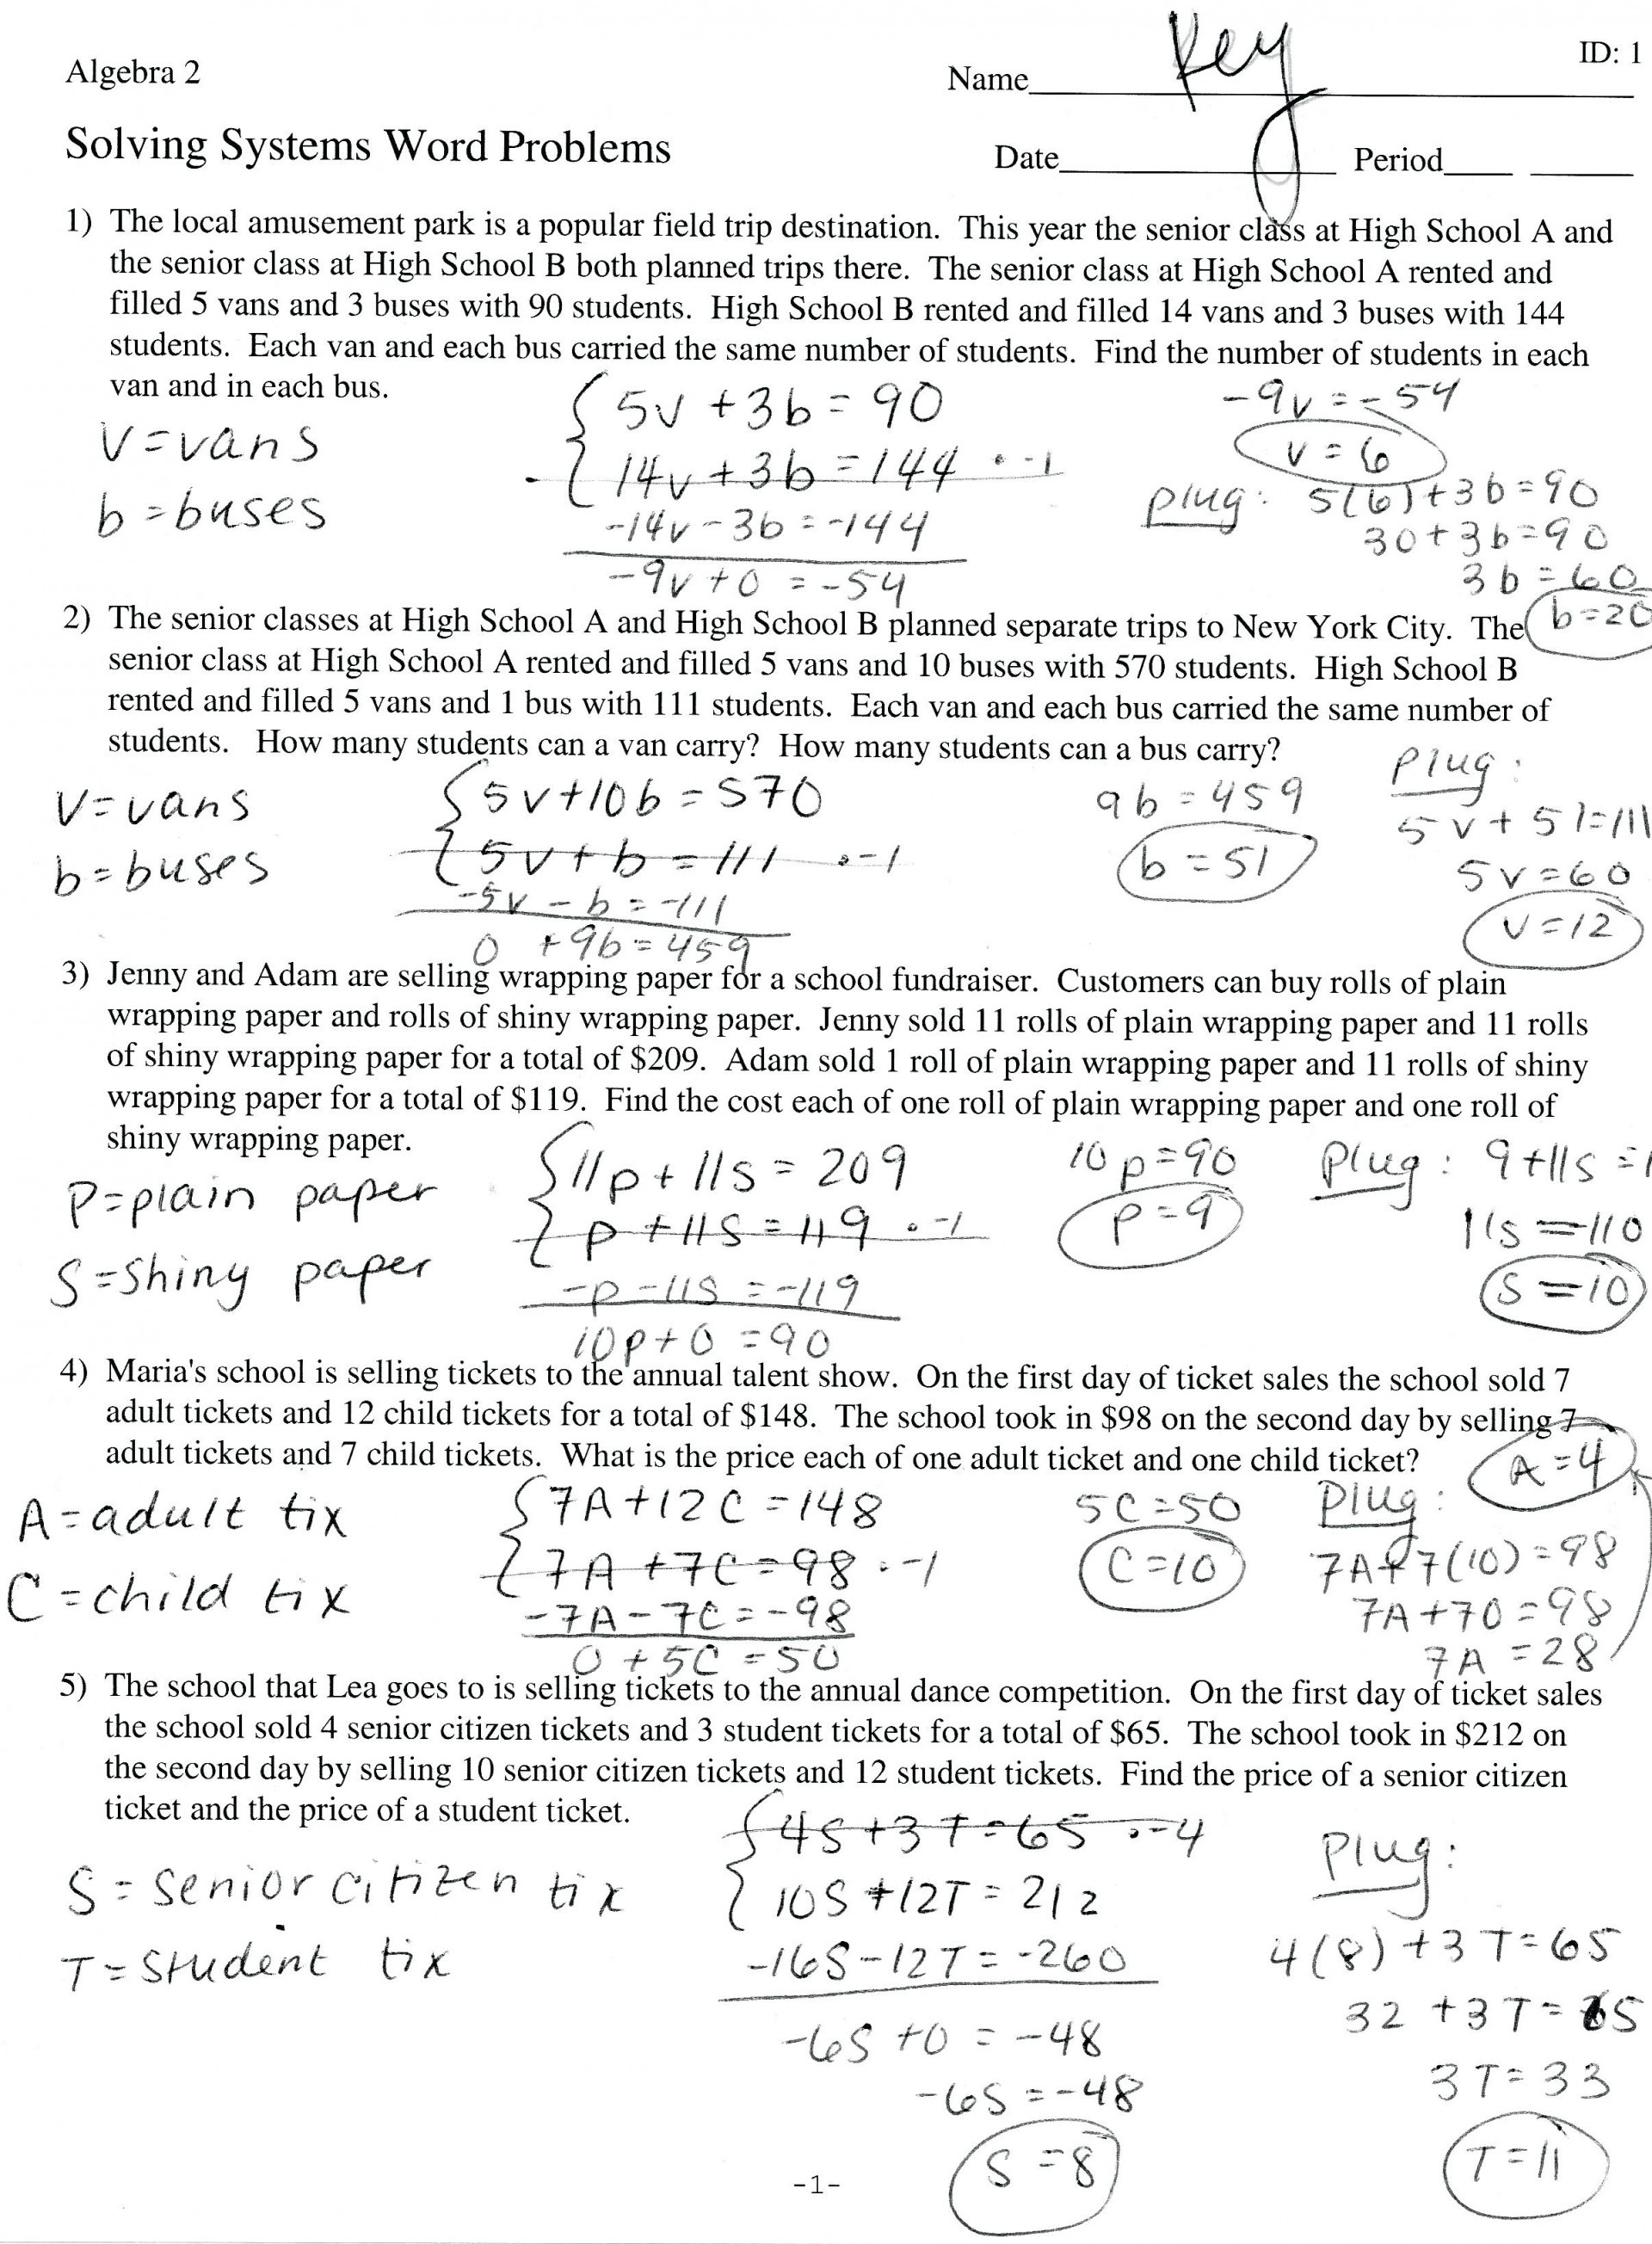 Solving Problems Algebraically Worksheet Answers | db ...